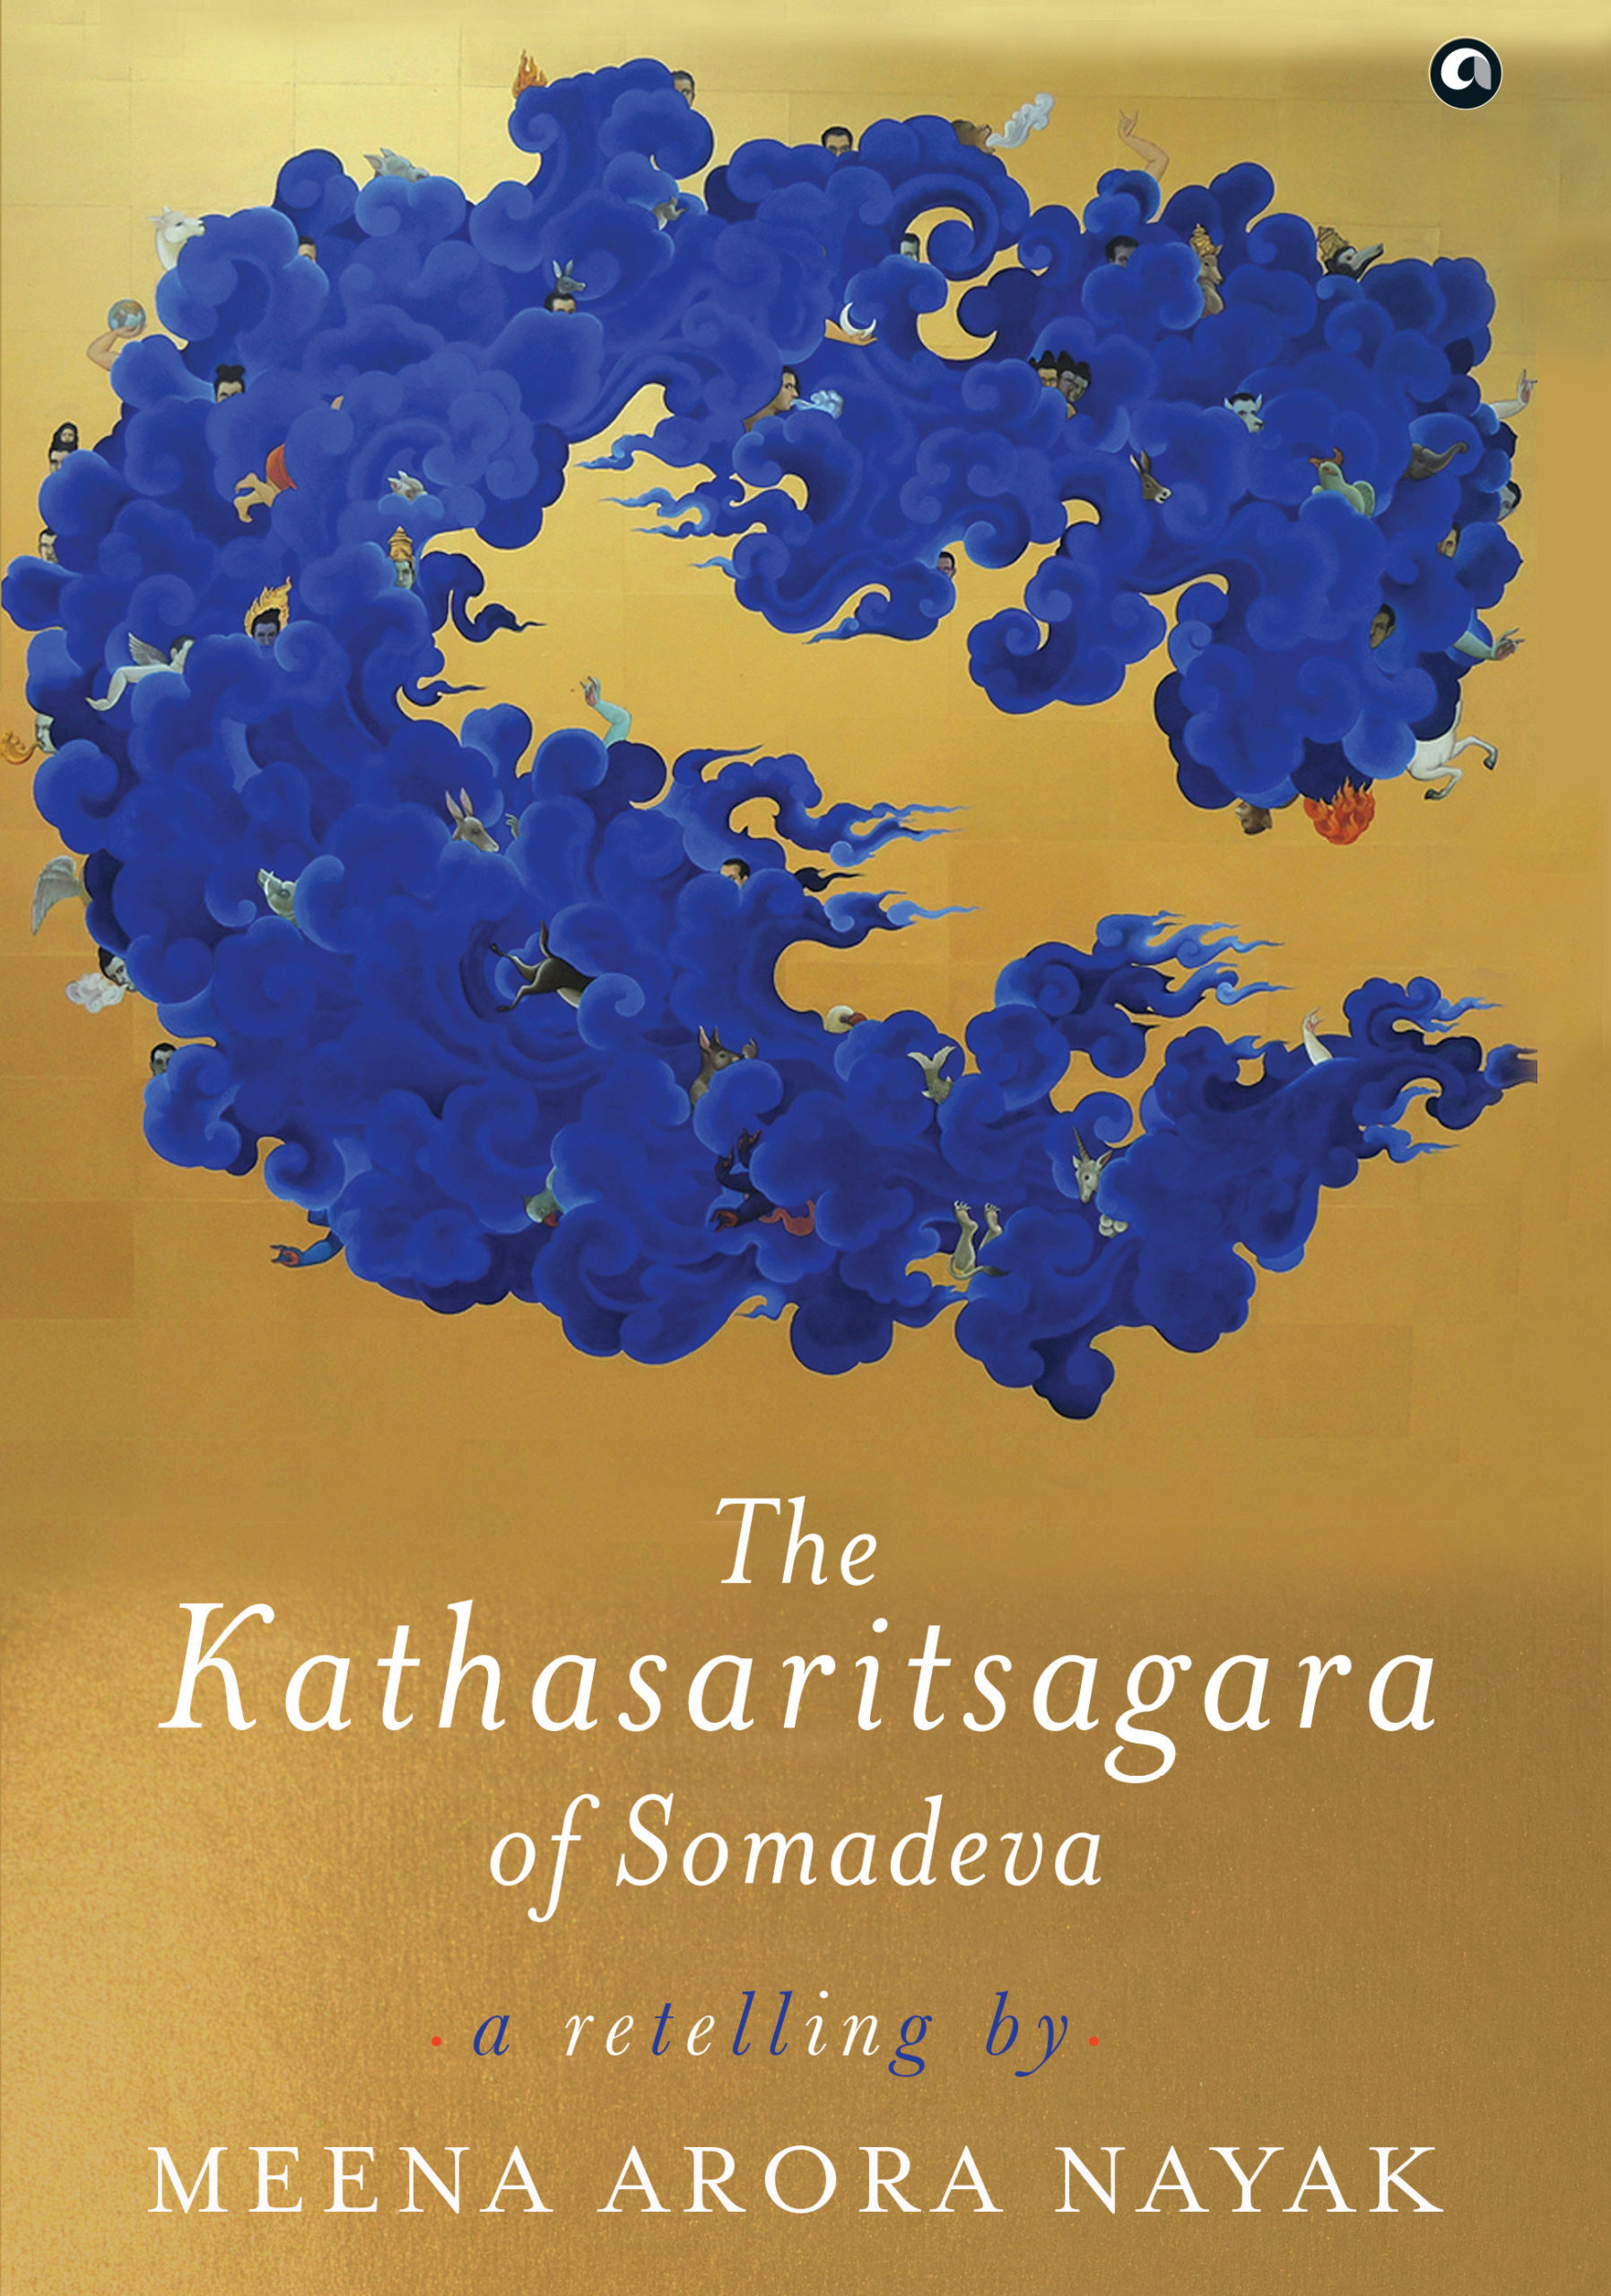 The Kathasaritsagara